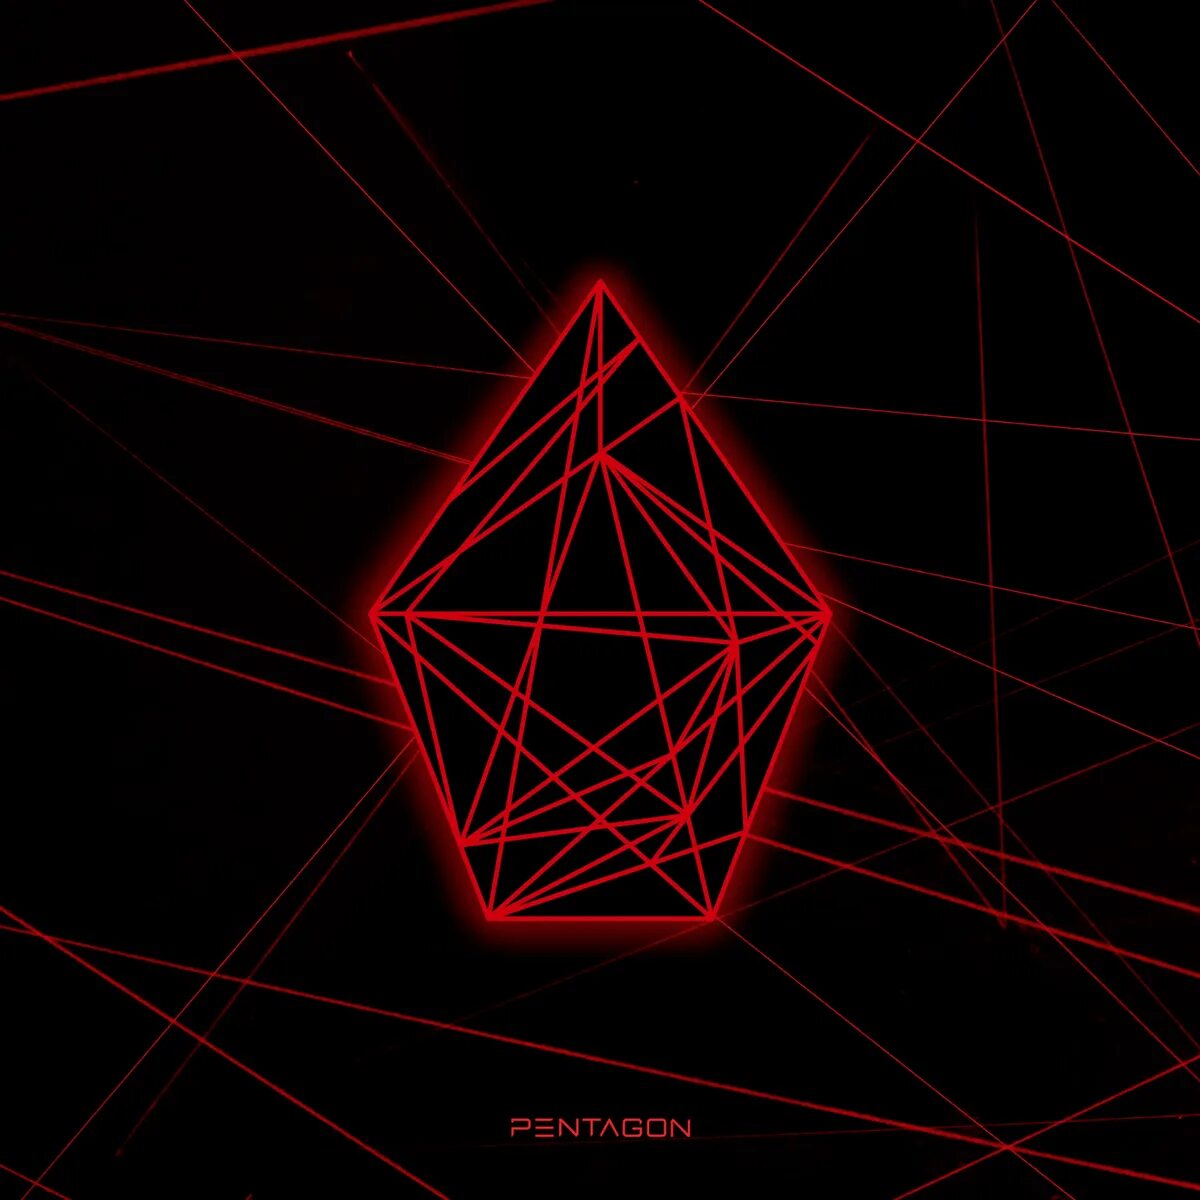 Black hall. Pentagon обложка. Pentagon Universe: the Black Hall album. Пентагон логотип группы. Знак пятиугольник.